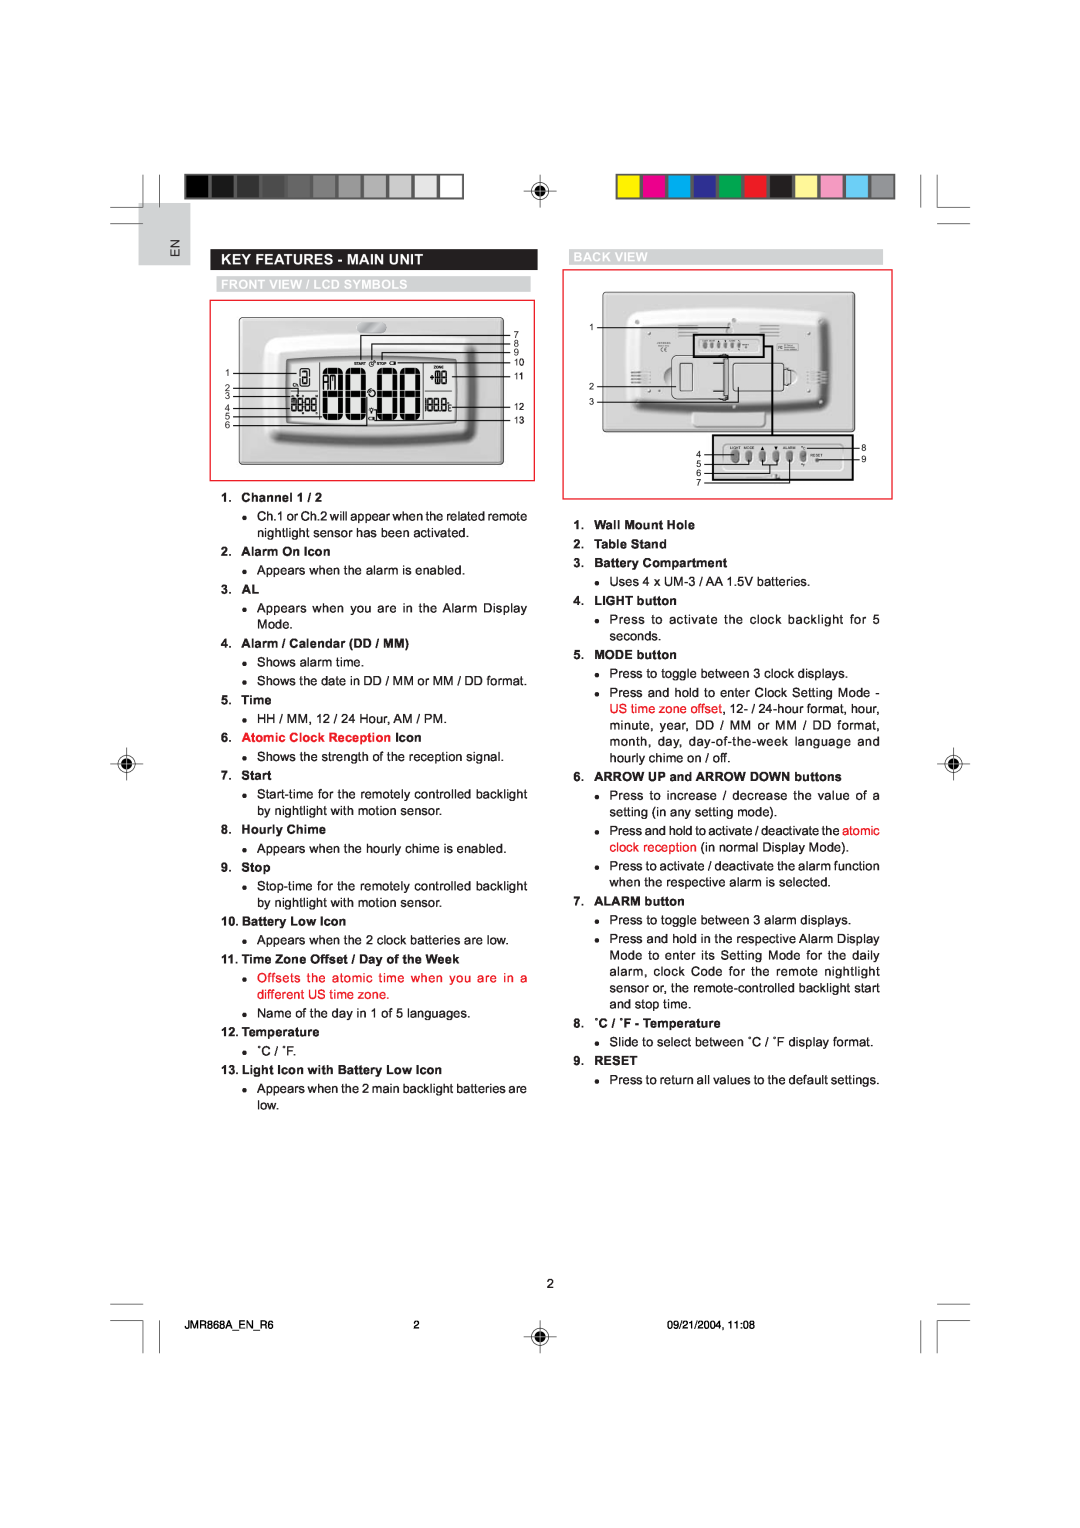 Oregon Scientific JMR868A Key Features - Main Unit, Front View / Lcd Symbols, Atomic Clock Reception Icon, Back View 